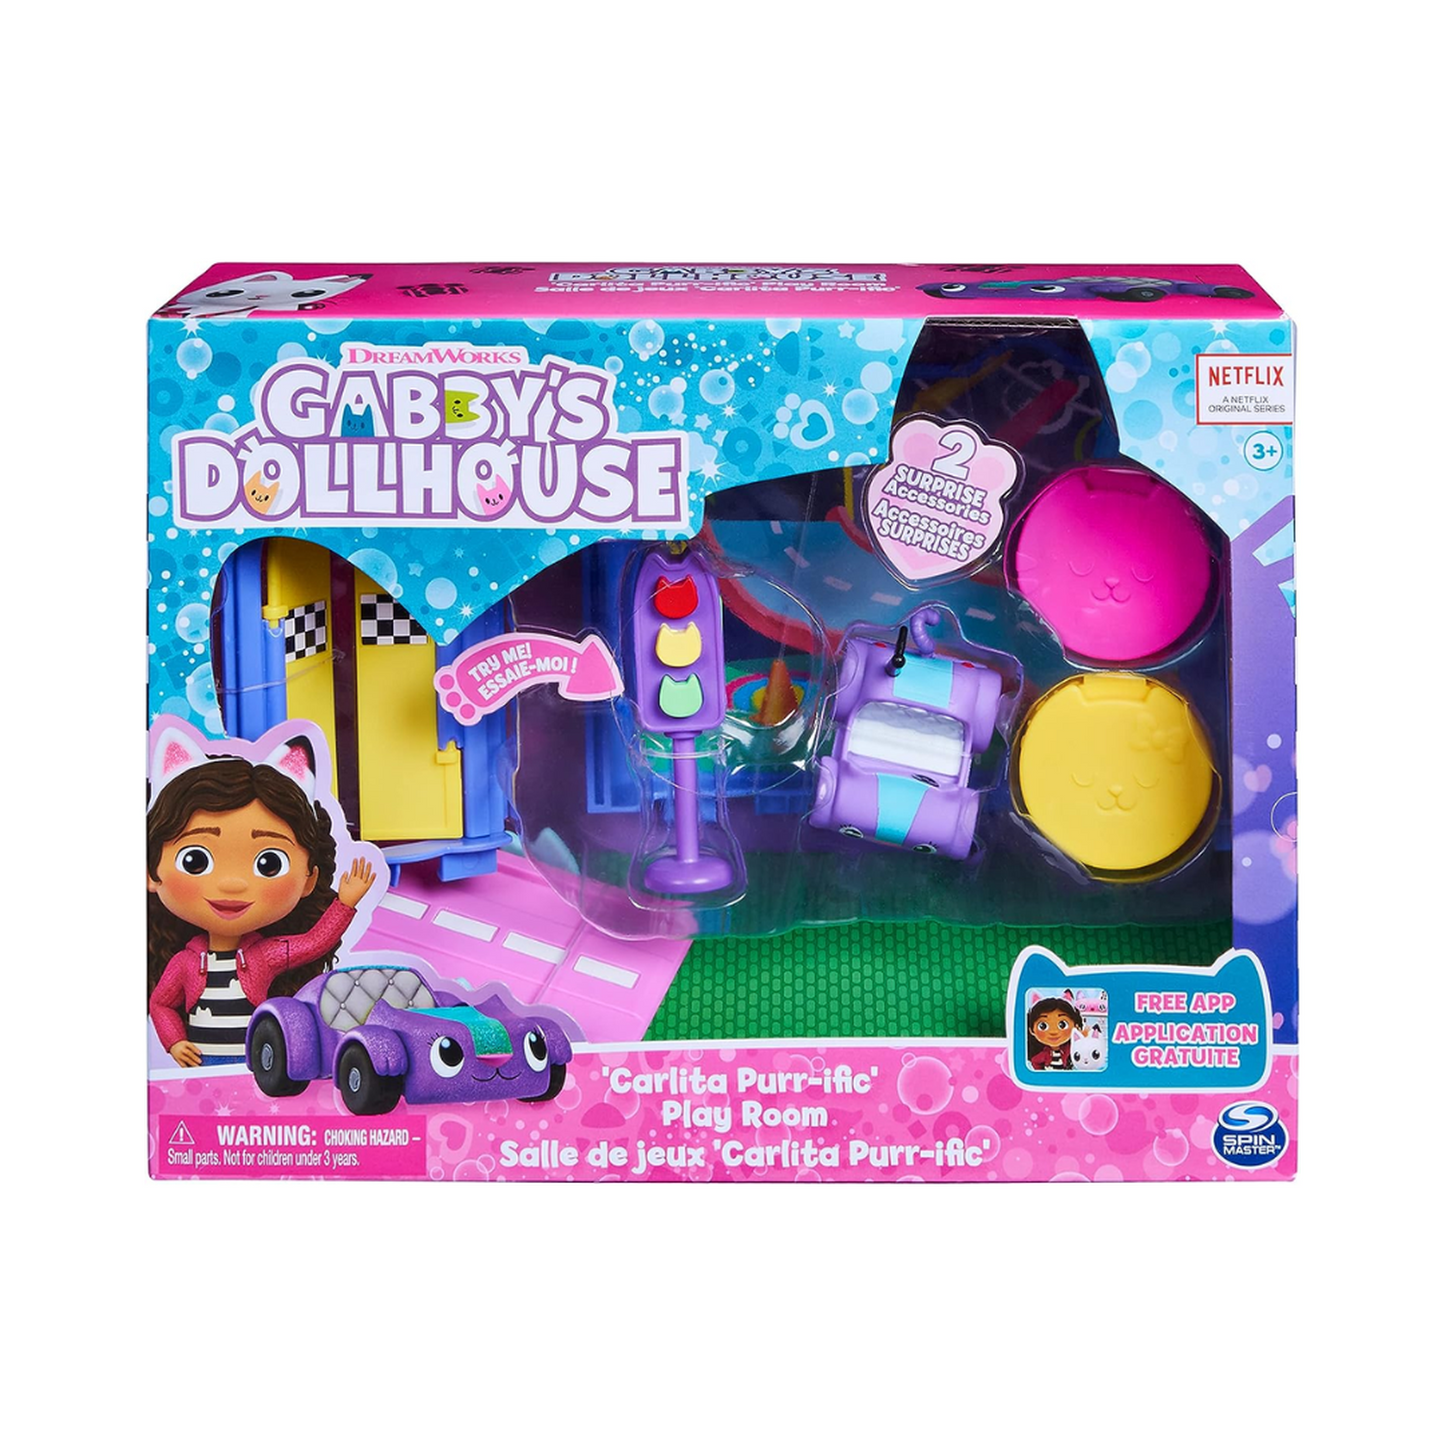 Gabby's Dollhouse, Carlita Purr-Ific Play Room